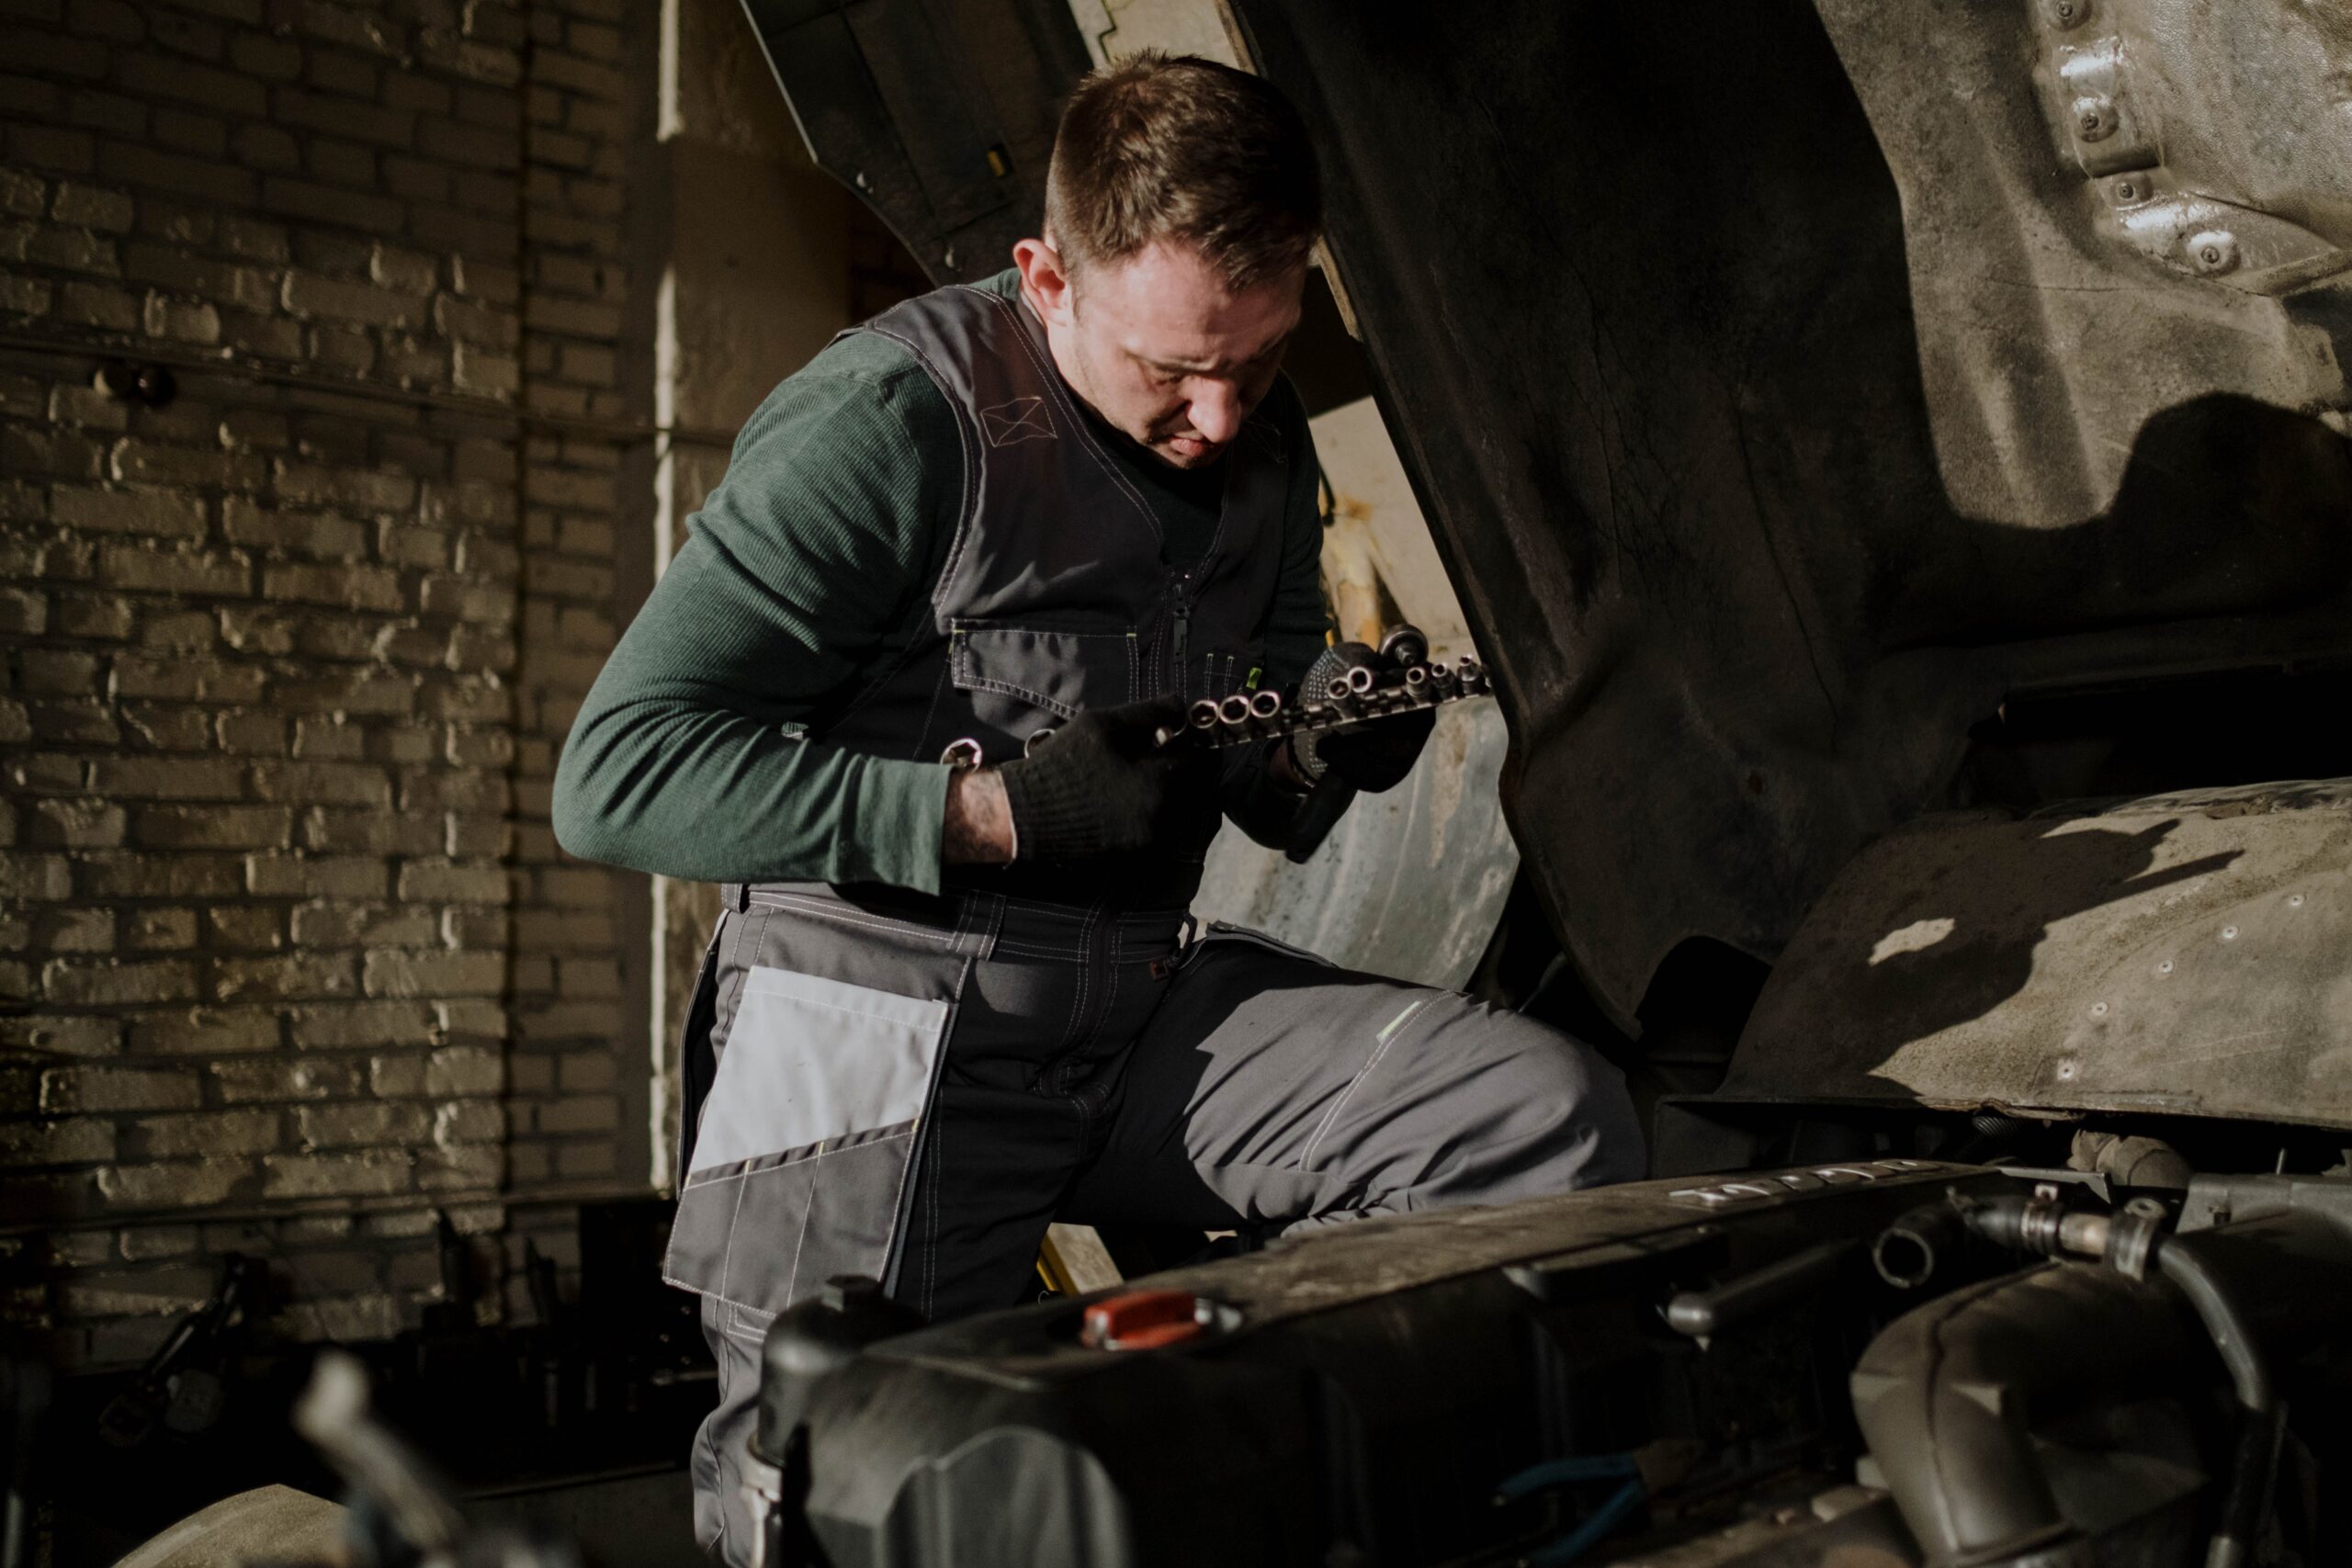 A diesel repair technician holding a gasket